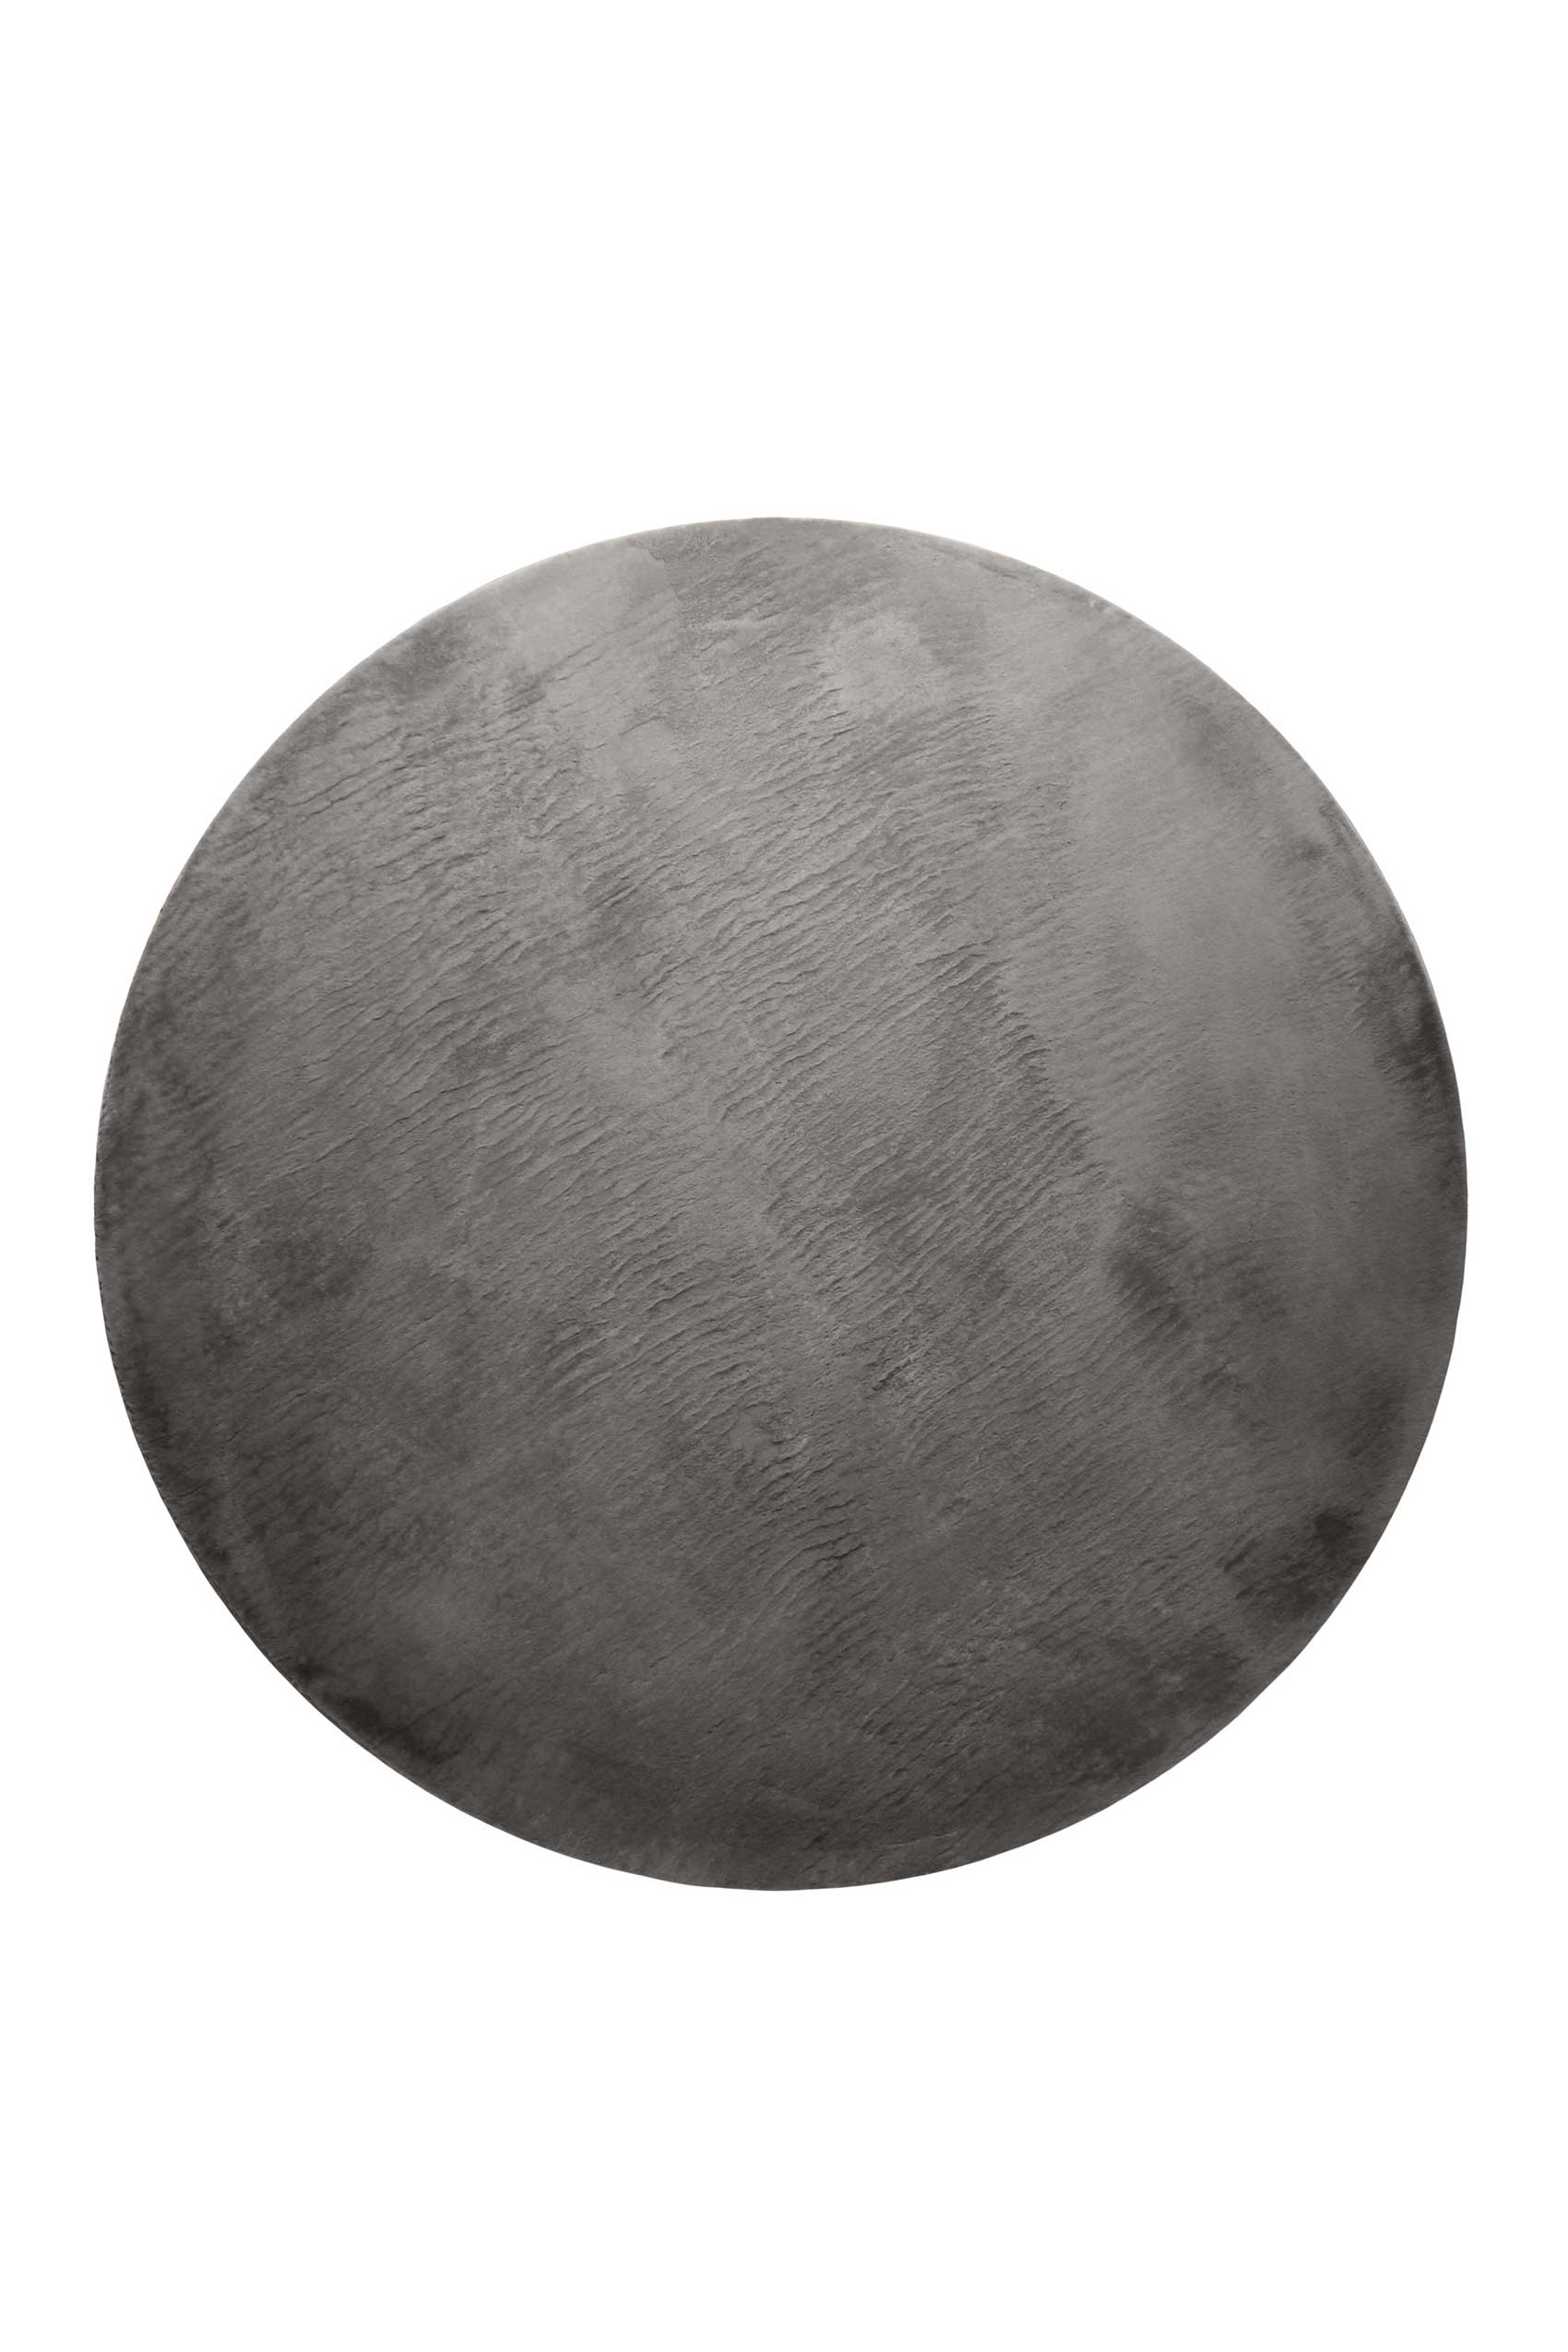 Tapis rond tufté mèches rases (15 mm)  gris anthracite 120 D